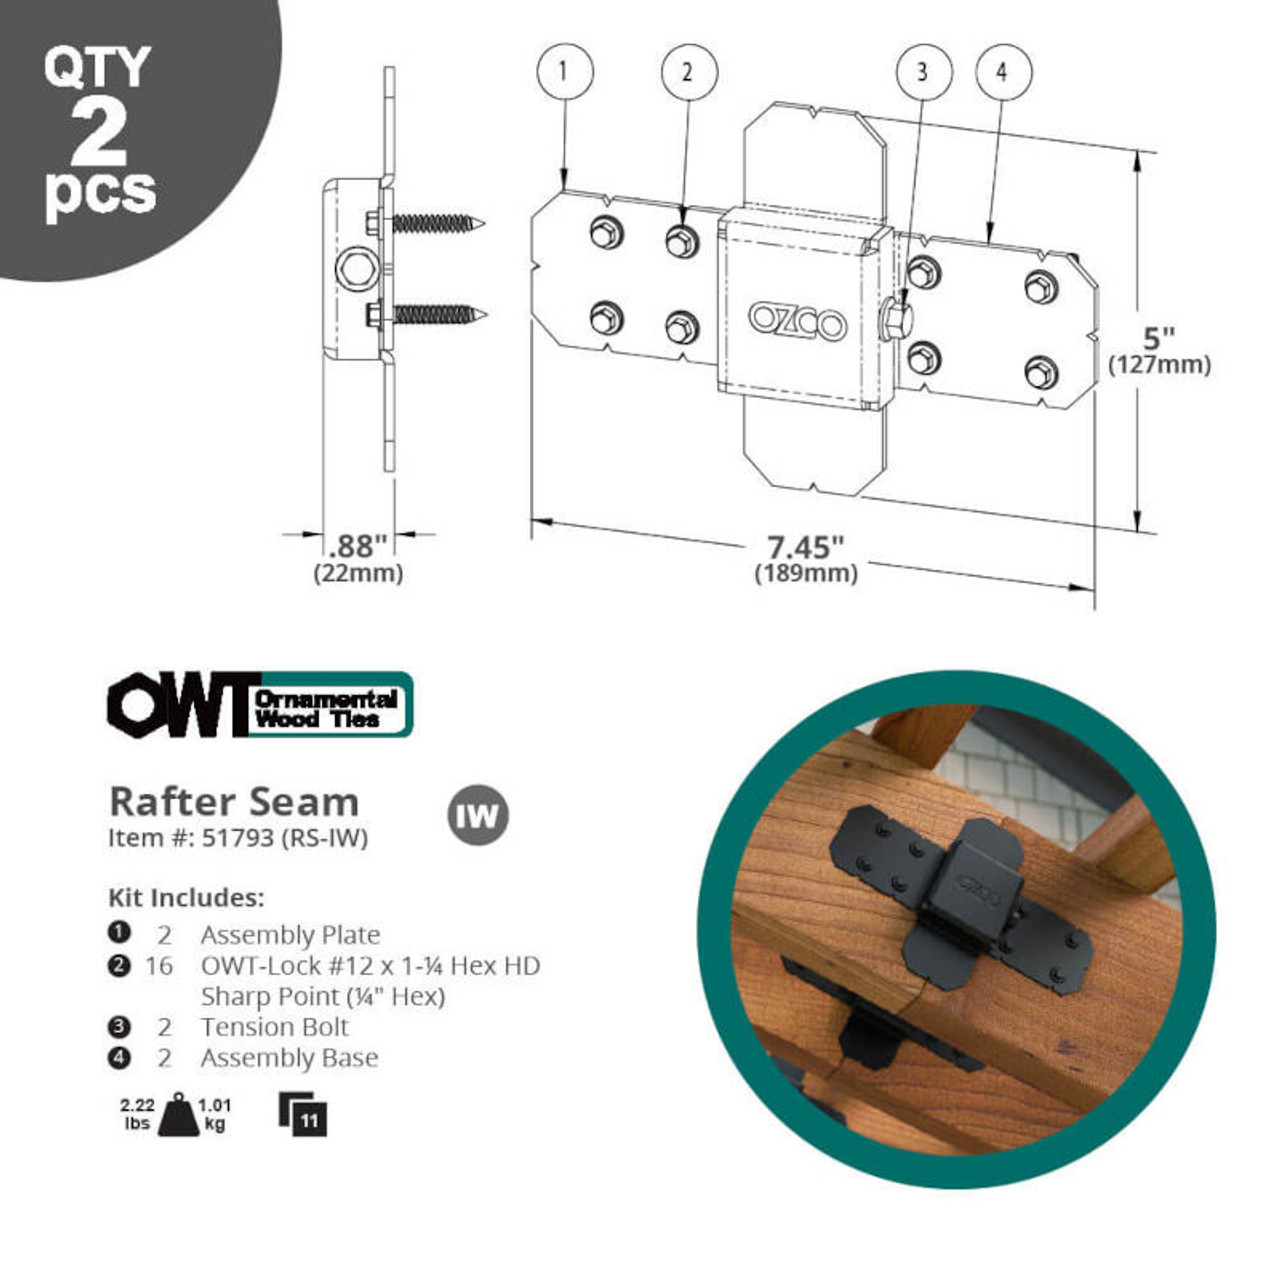 OWT Ironwood Rafter Seam by OZCO OWT Hardware  - Dimension Illustration